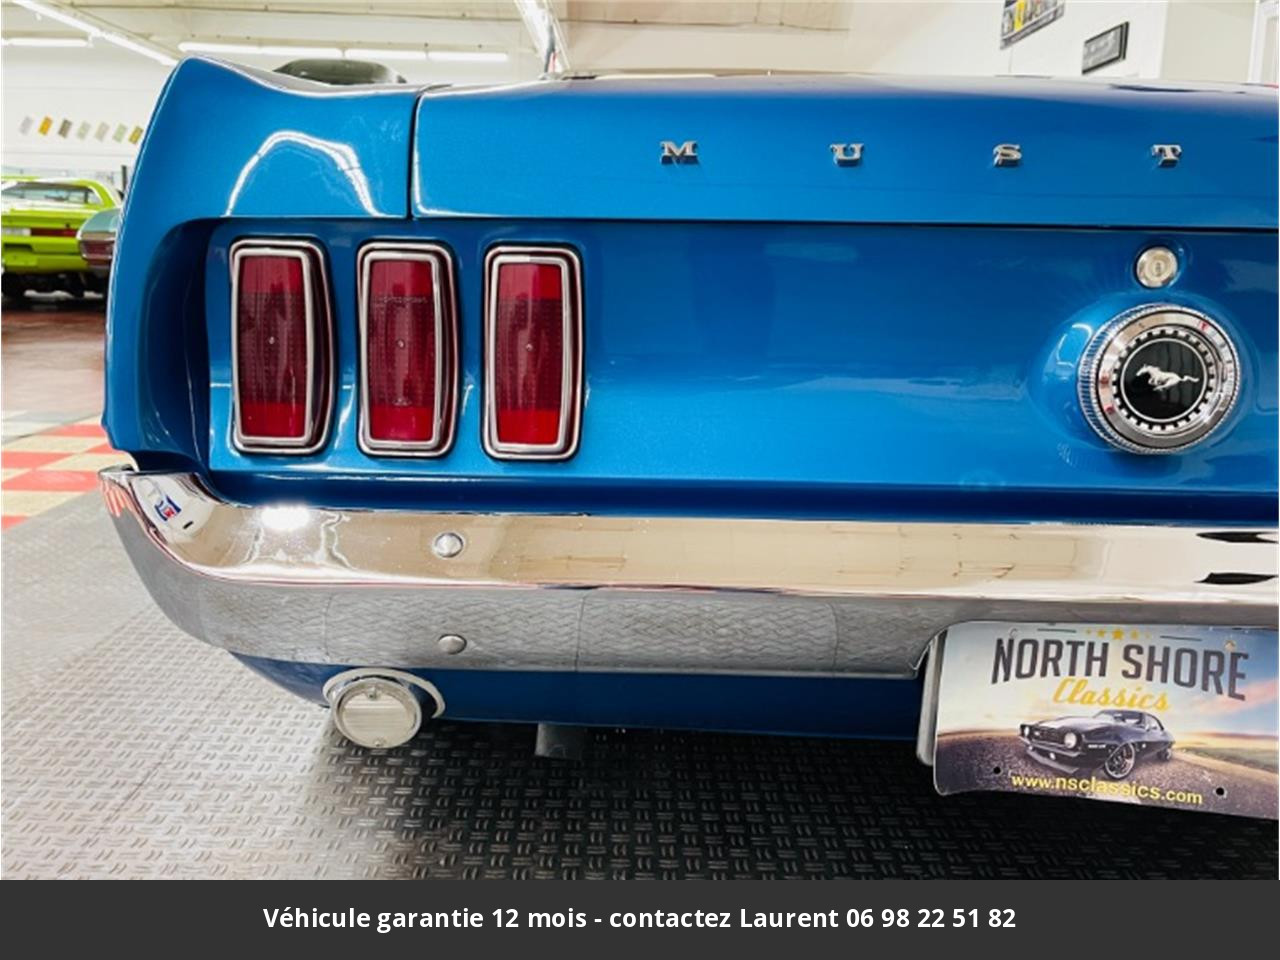 Ford Mustang 289 ci v8 1969 prix tout compris